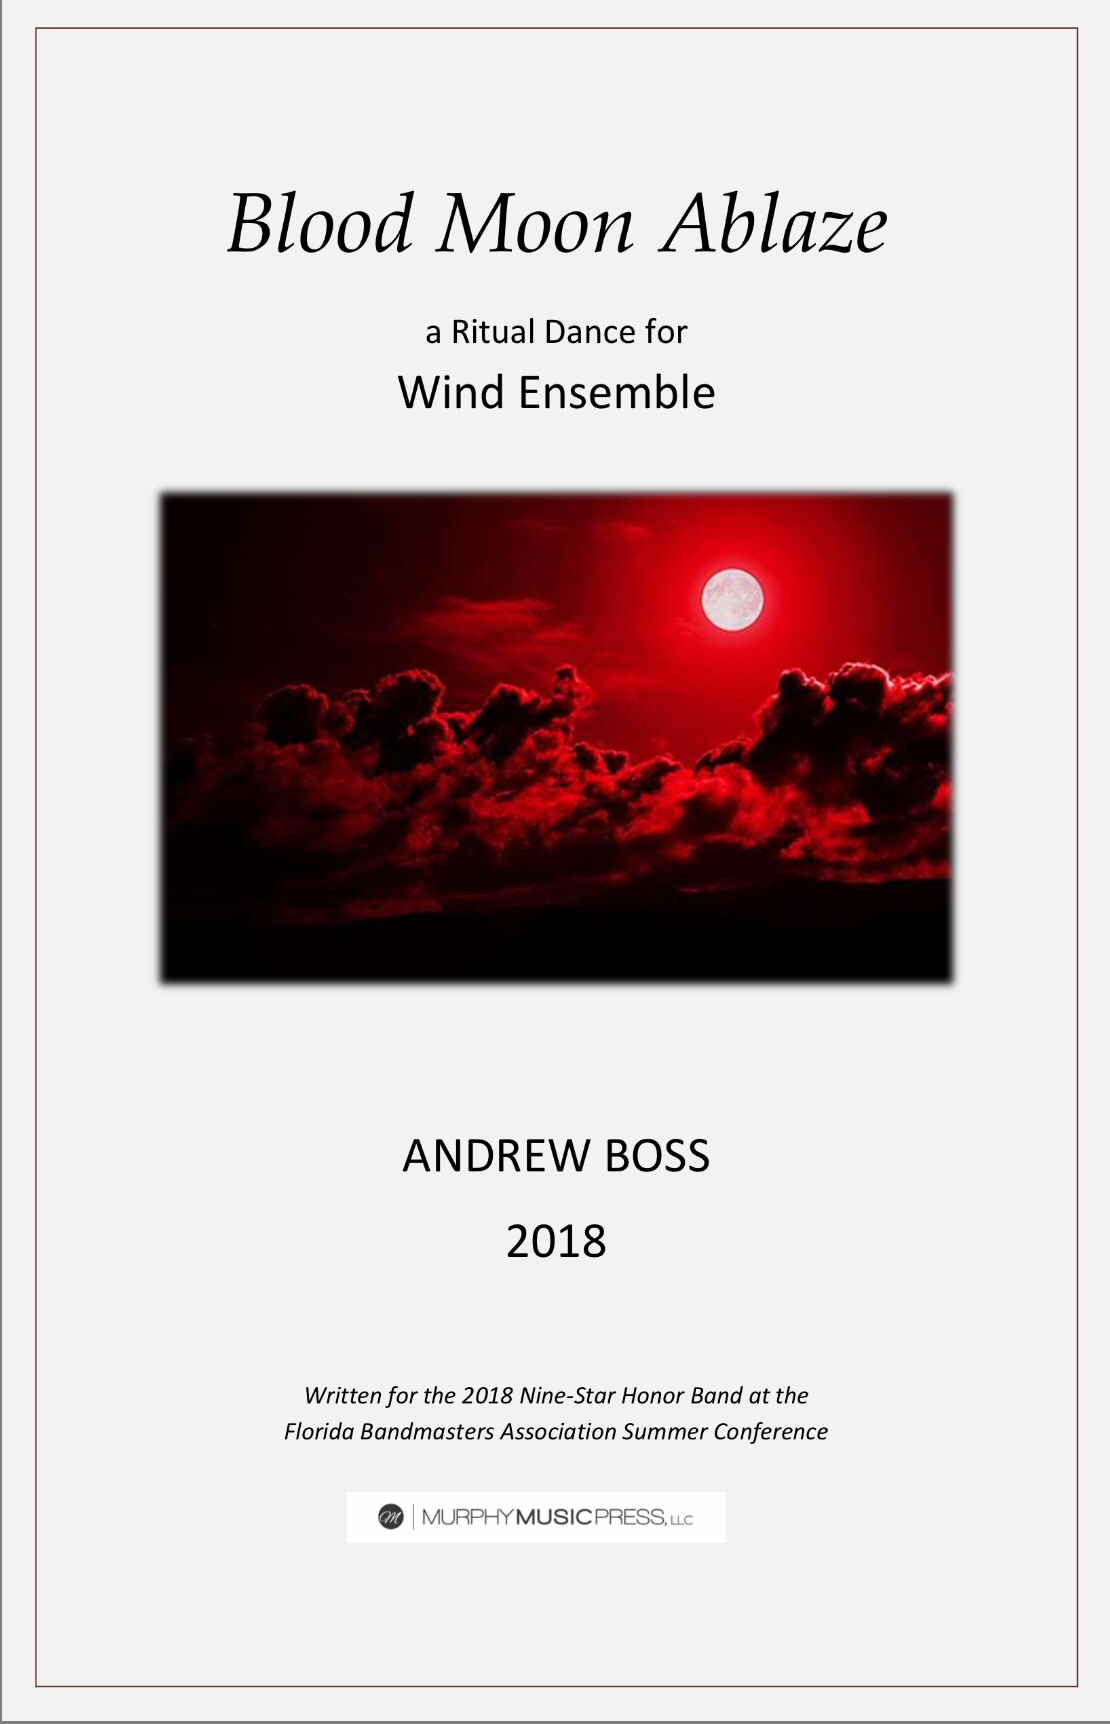 Blood Moon Ablaze by Andrew Boss